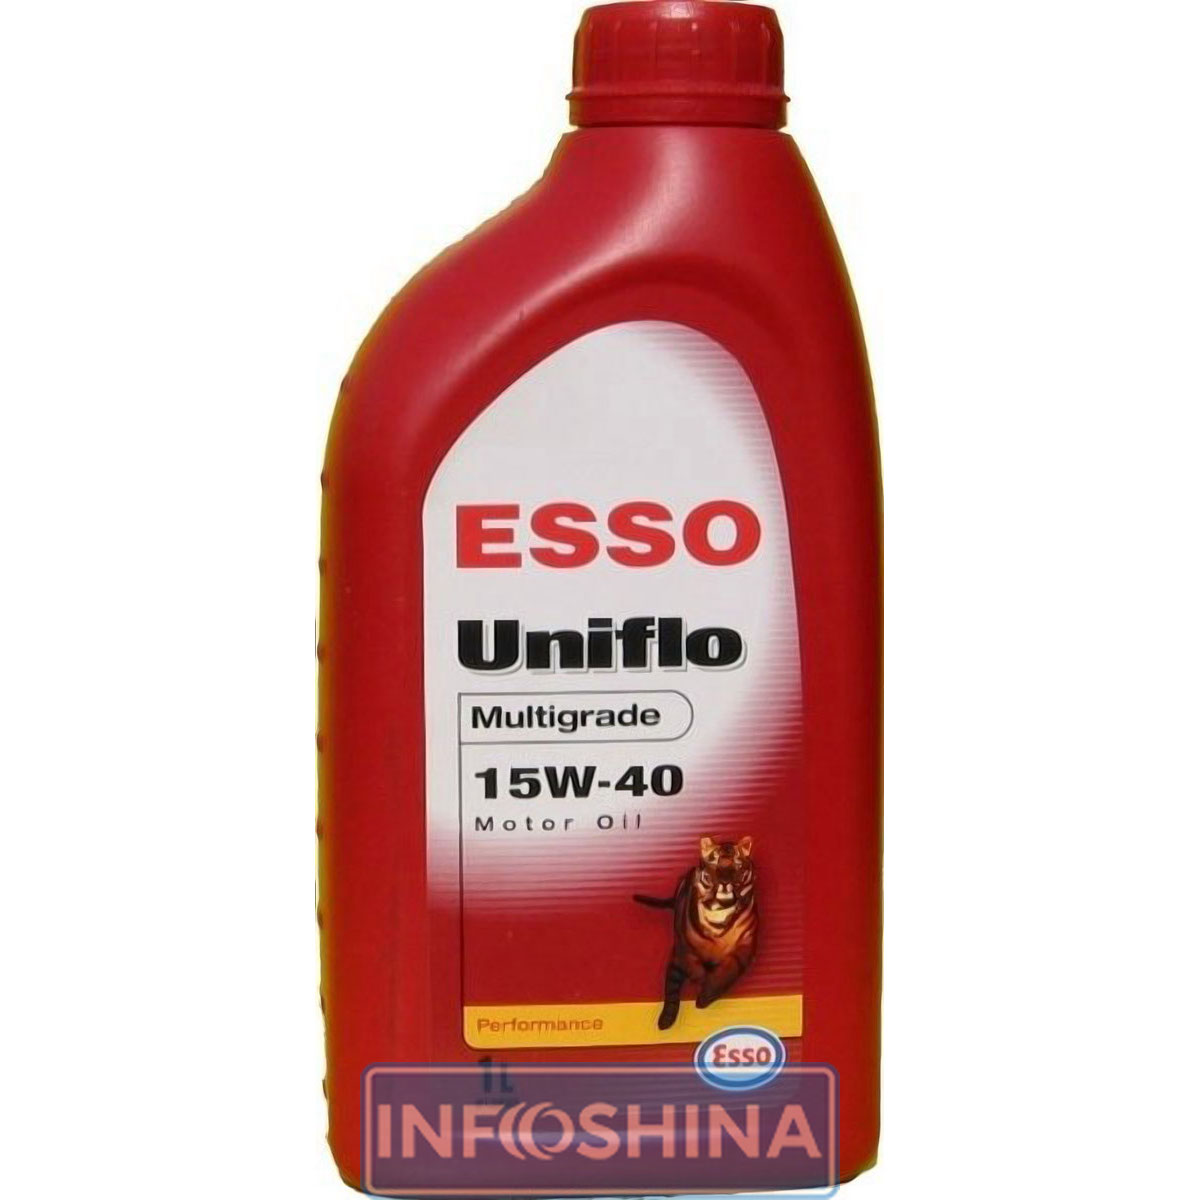 ESSO Uniflo 15W-40